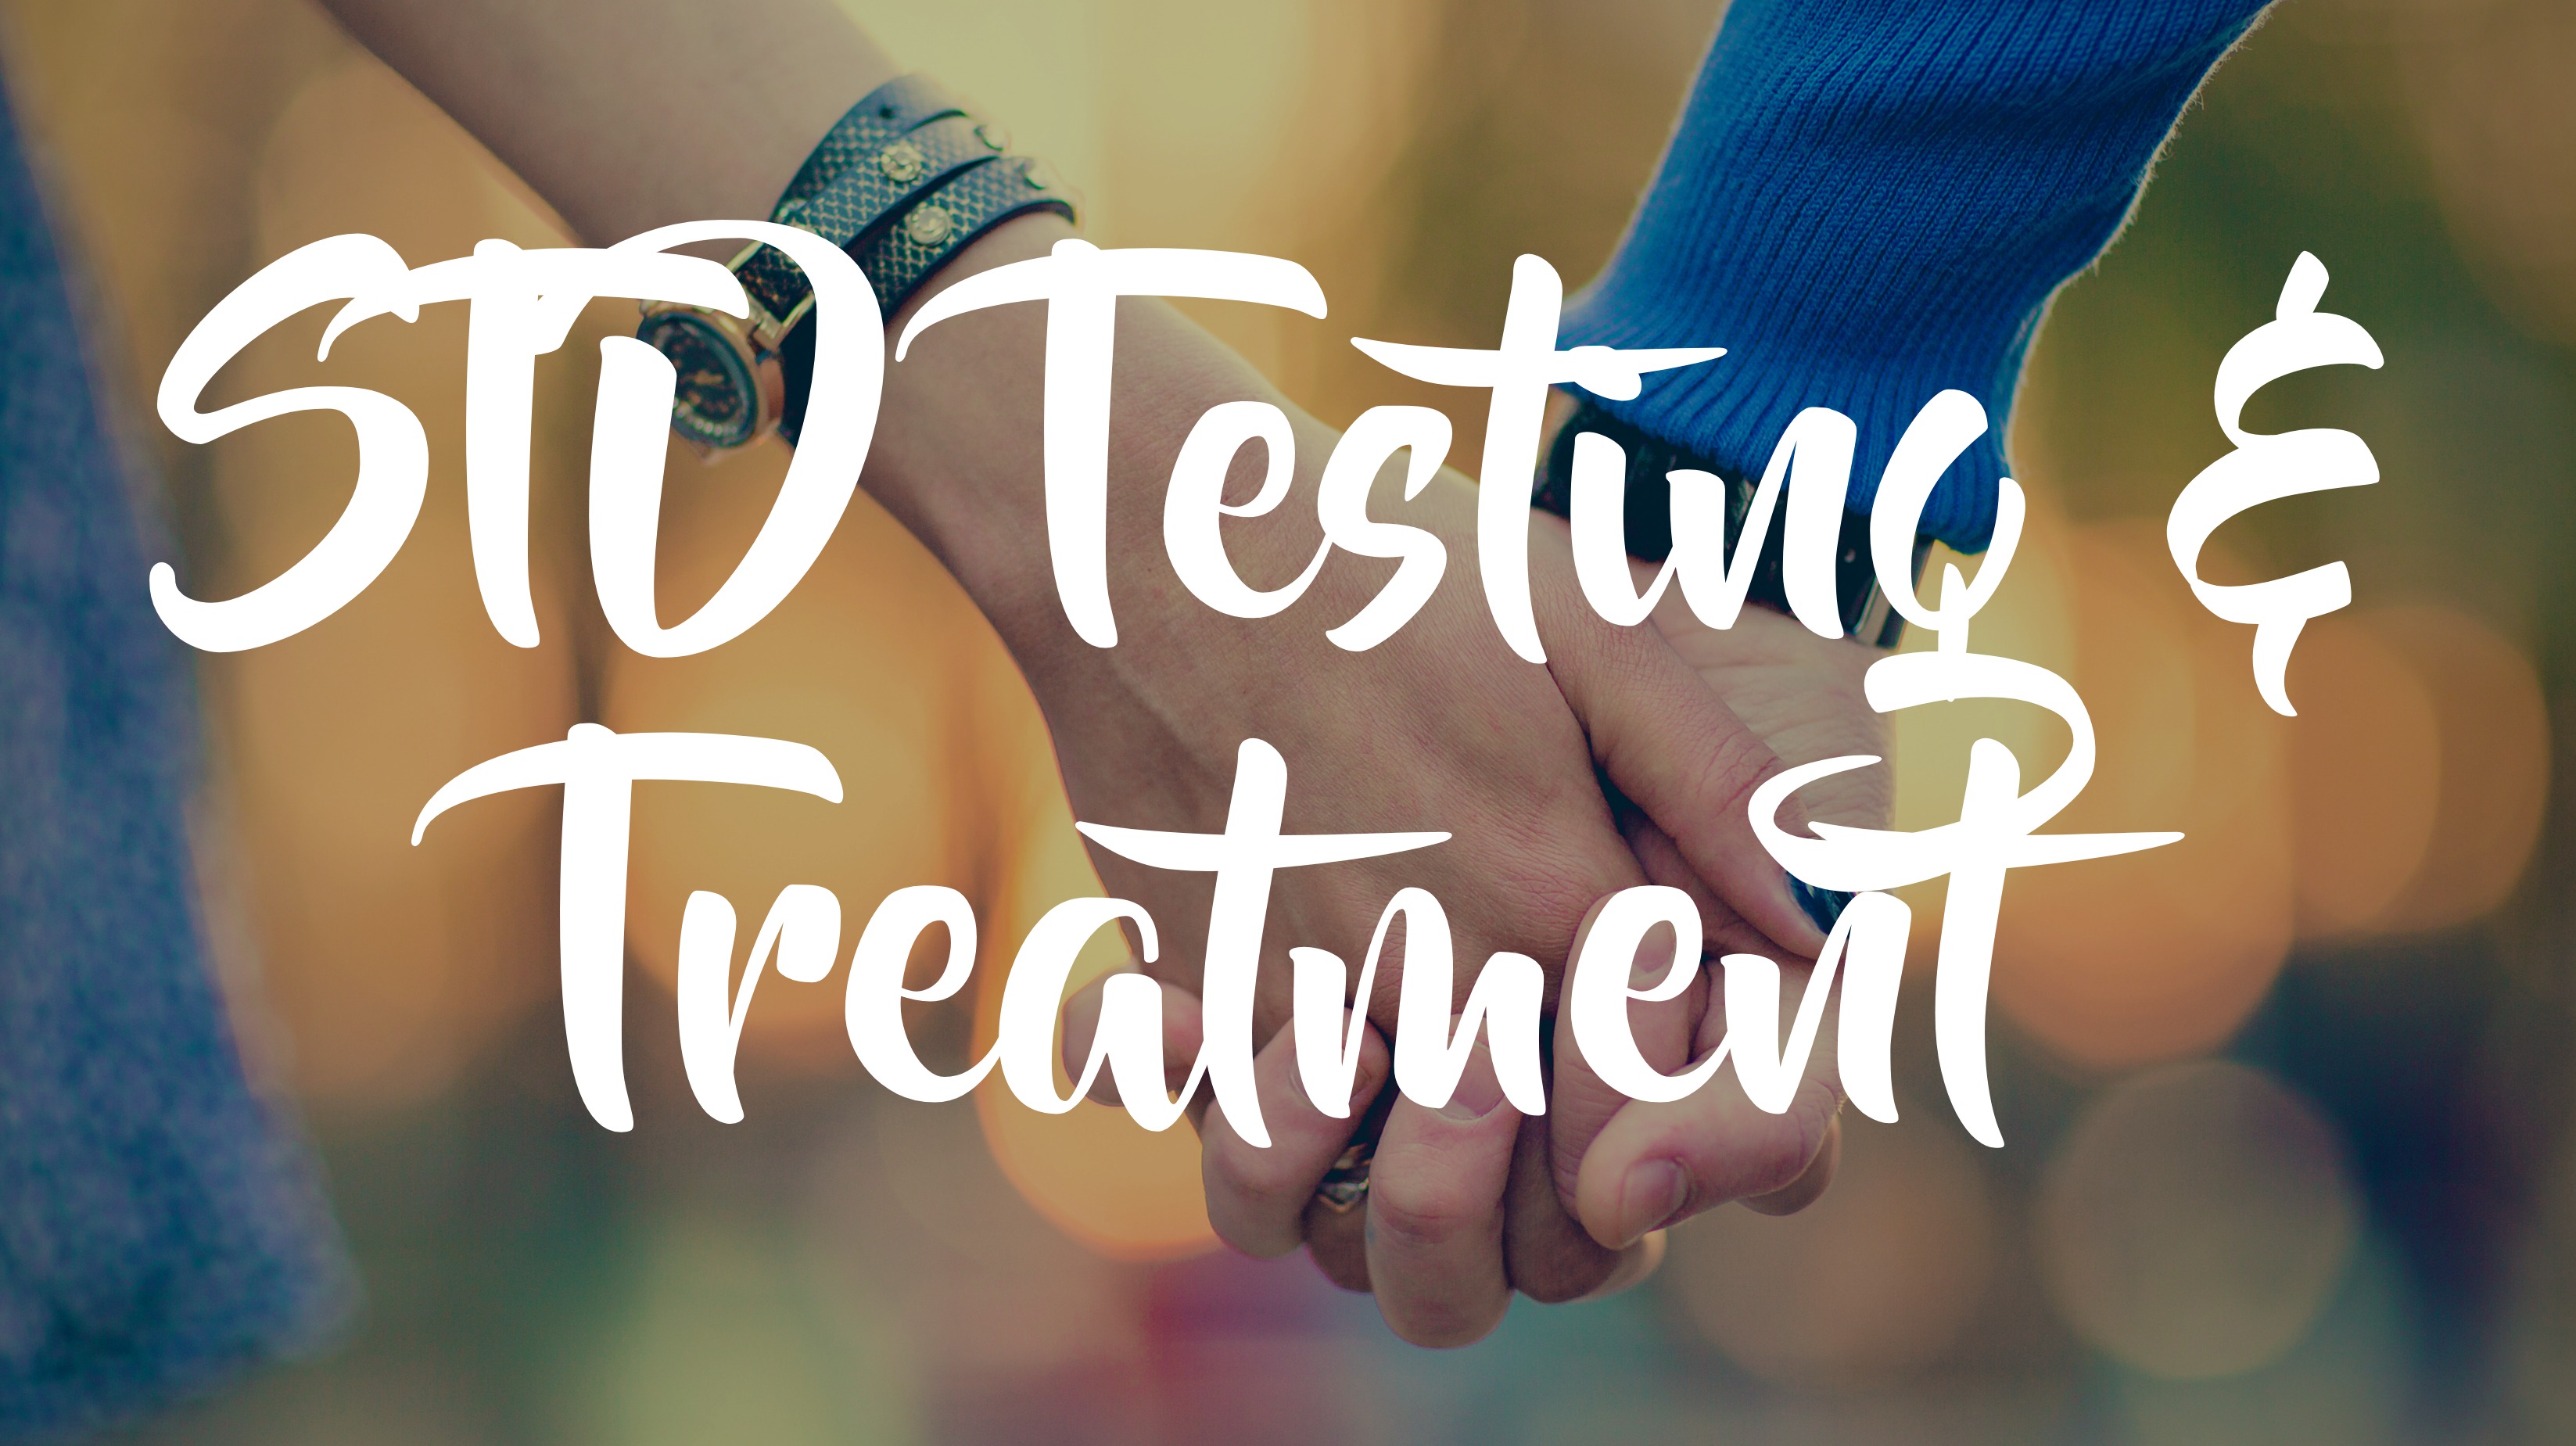 Free STD Testing & Treatment for Chlamydia & Gonorrhea | Yakima County WA